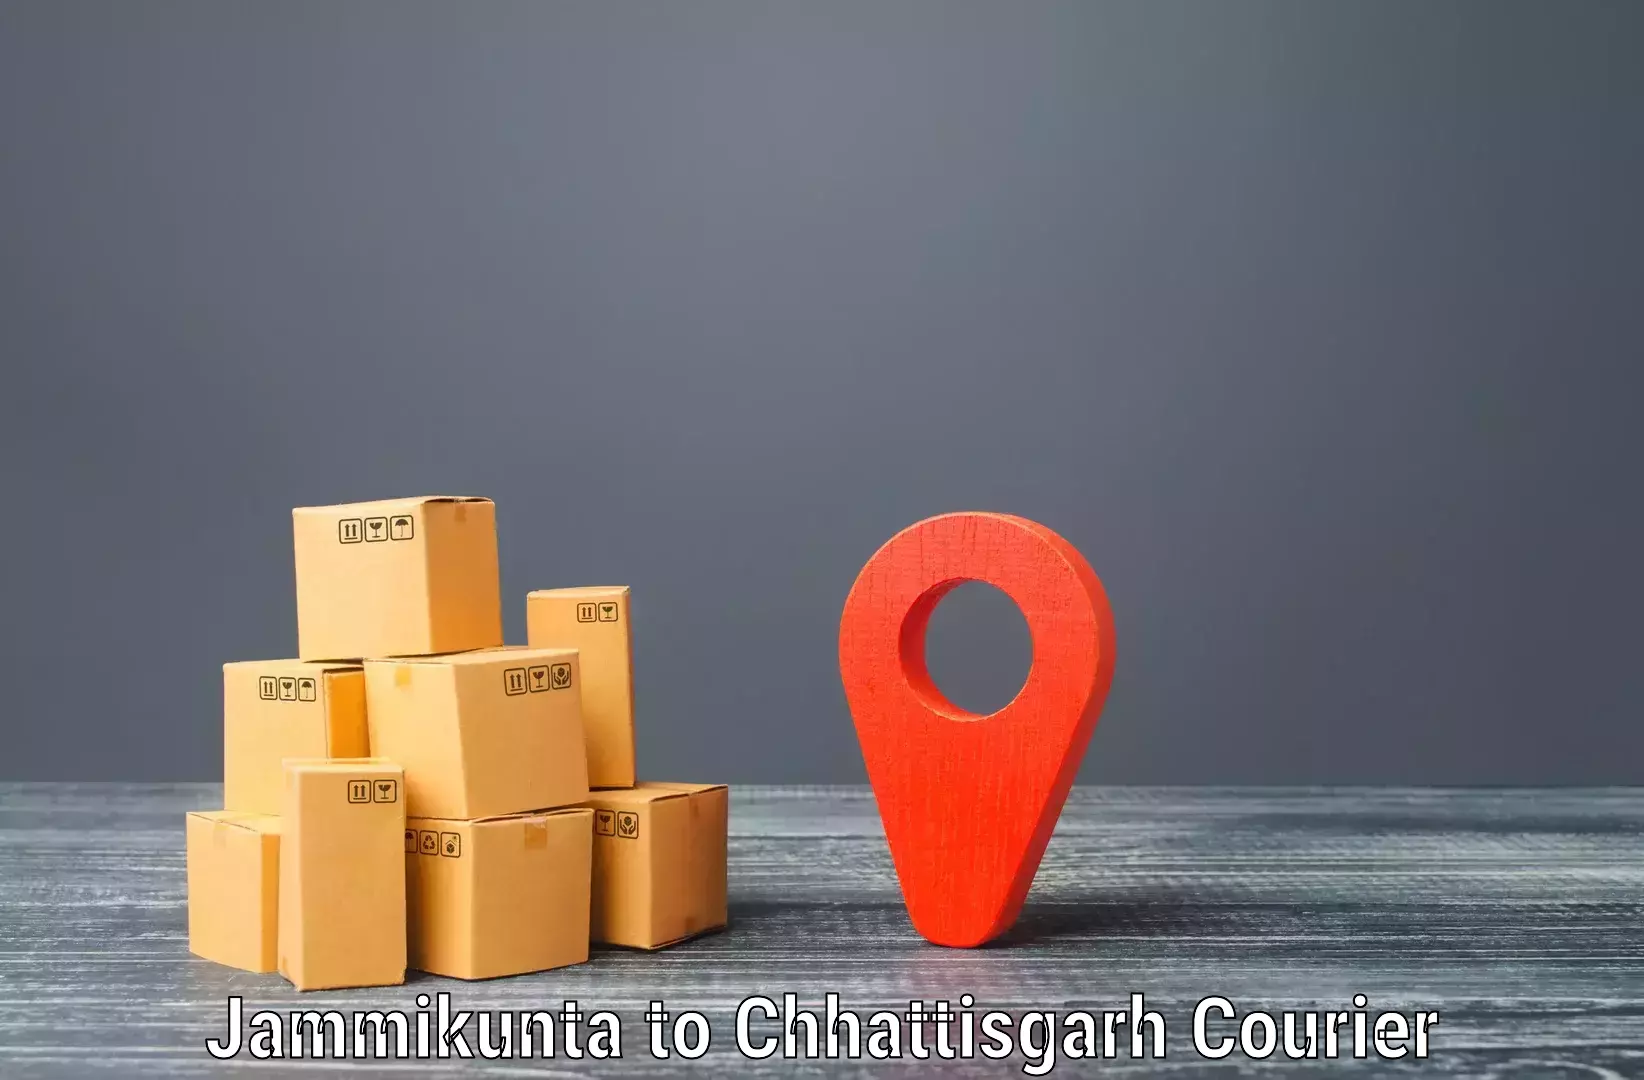 Express mail service Jammikunta to Korea Chhattisgarh